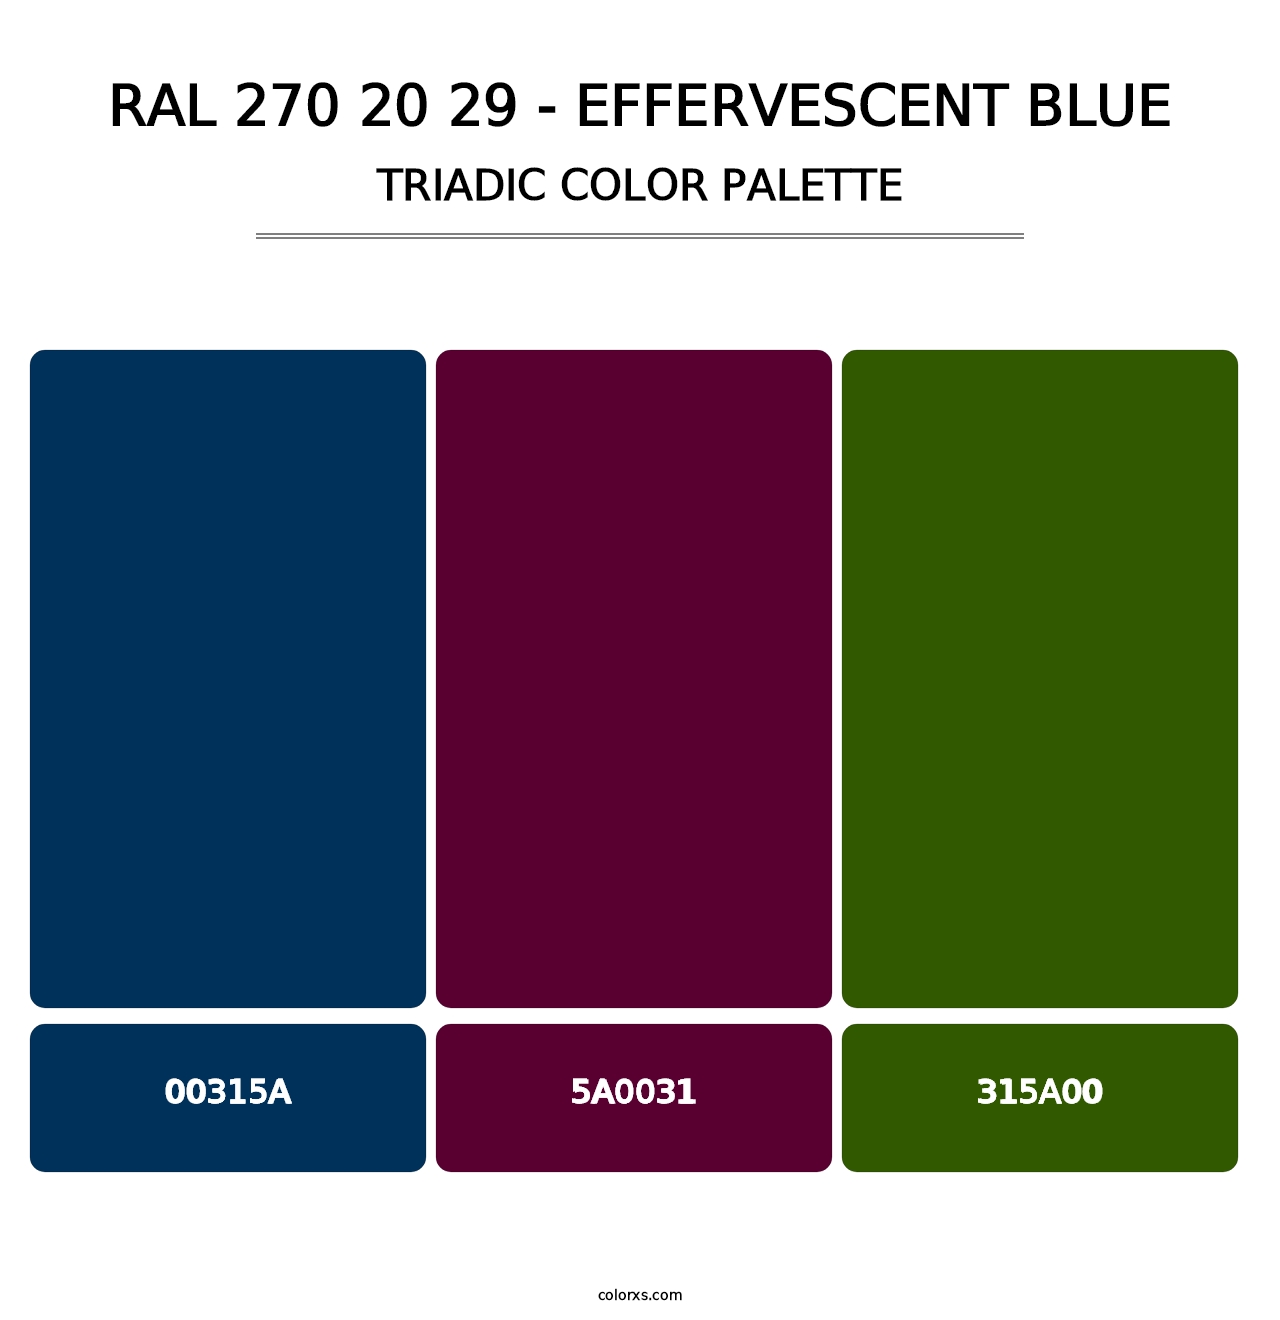 RAL 270 20 29 - Effervescent Blue - Triadic Color Palette